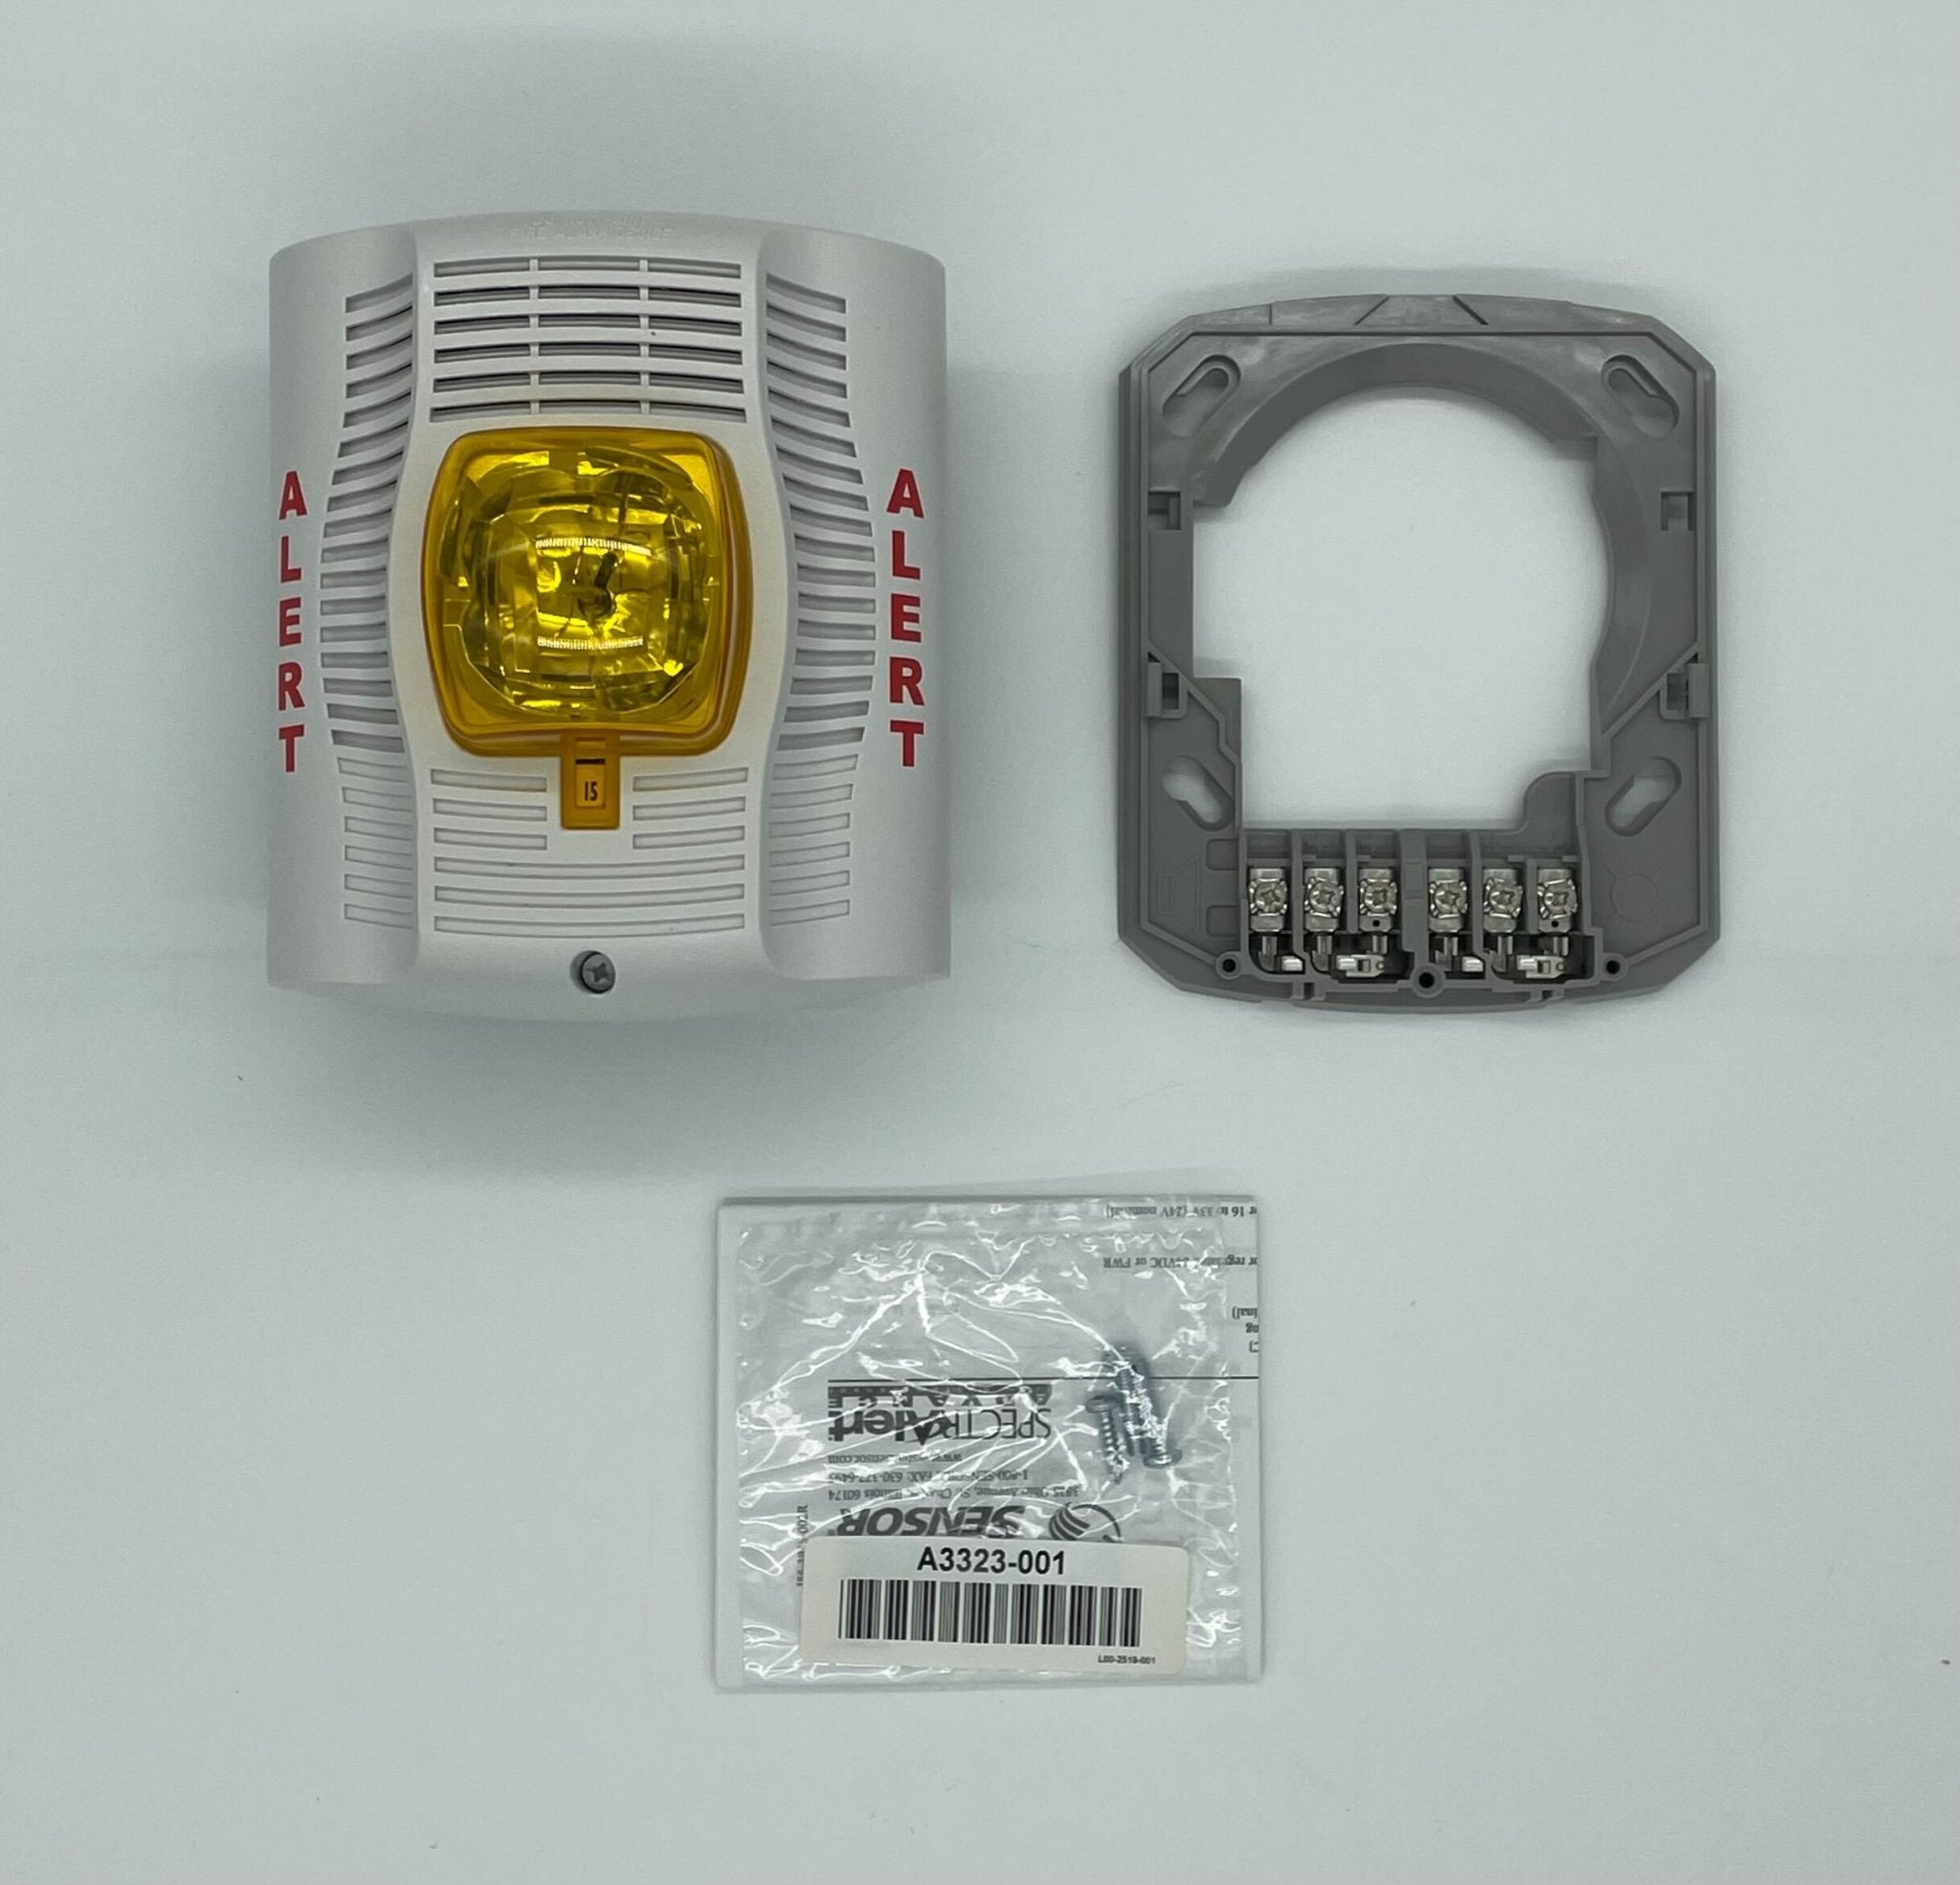 System Sensor SPSW-ALERT - The Fire Alarm Supplier